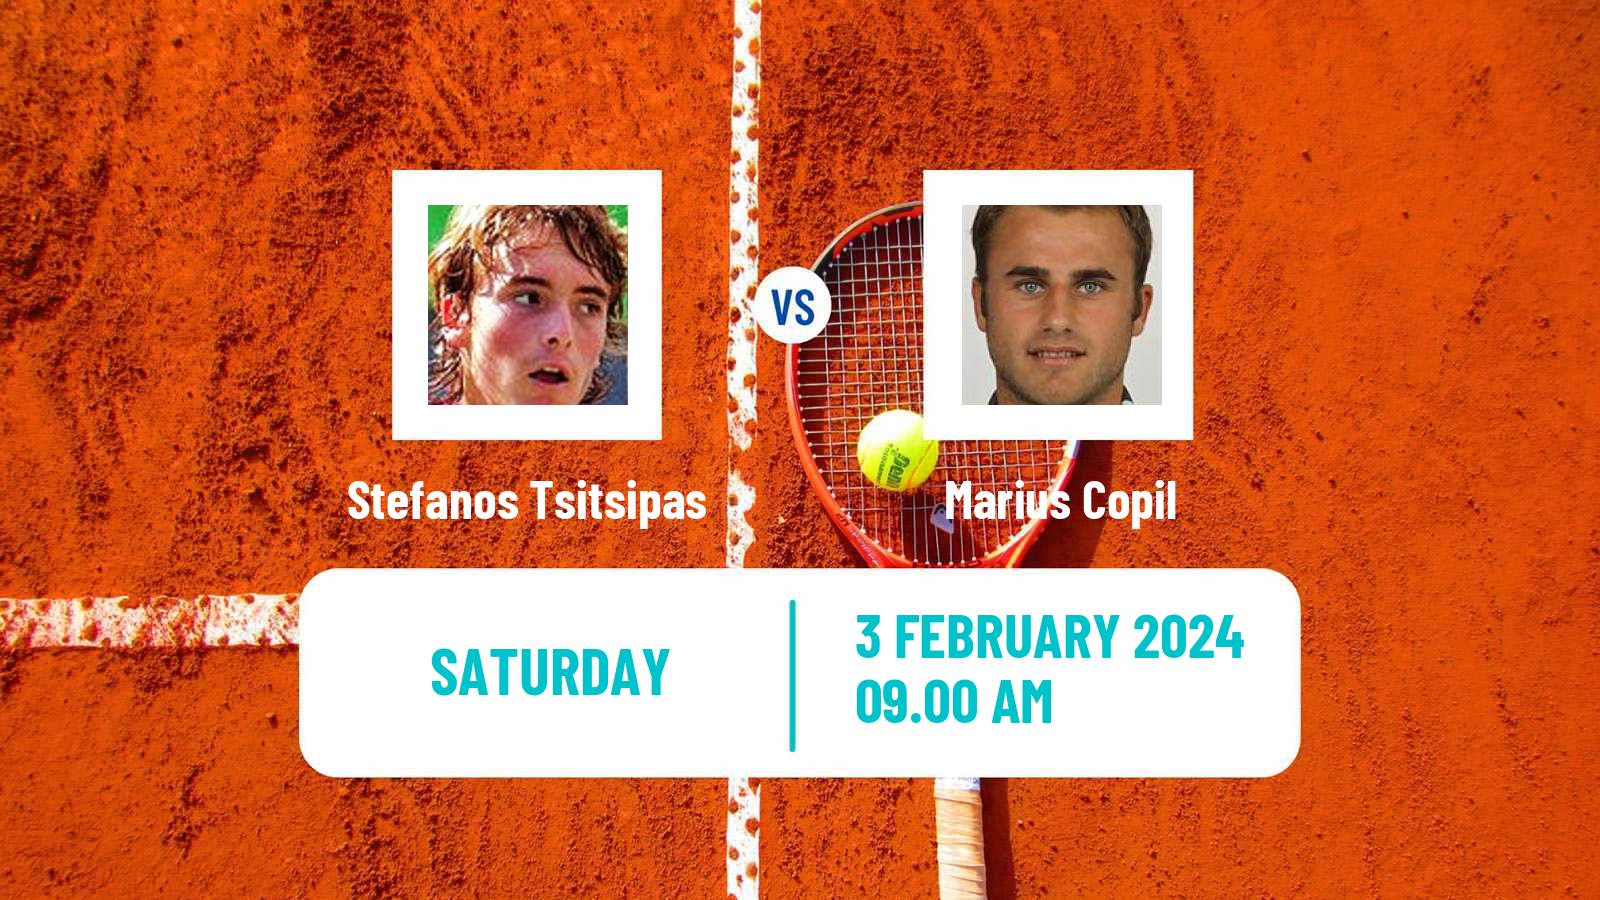 Tennis Davis Cup World Group I Stefanos Tsitsipas - Marius Copil